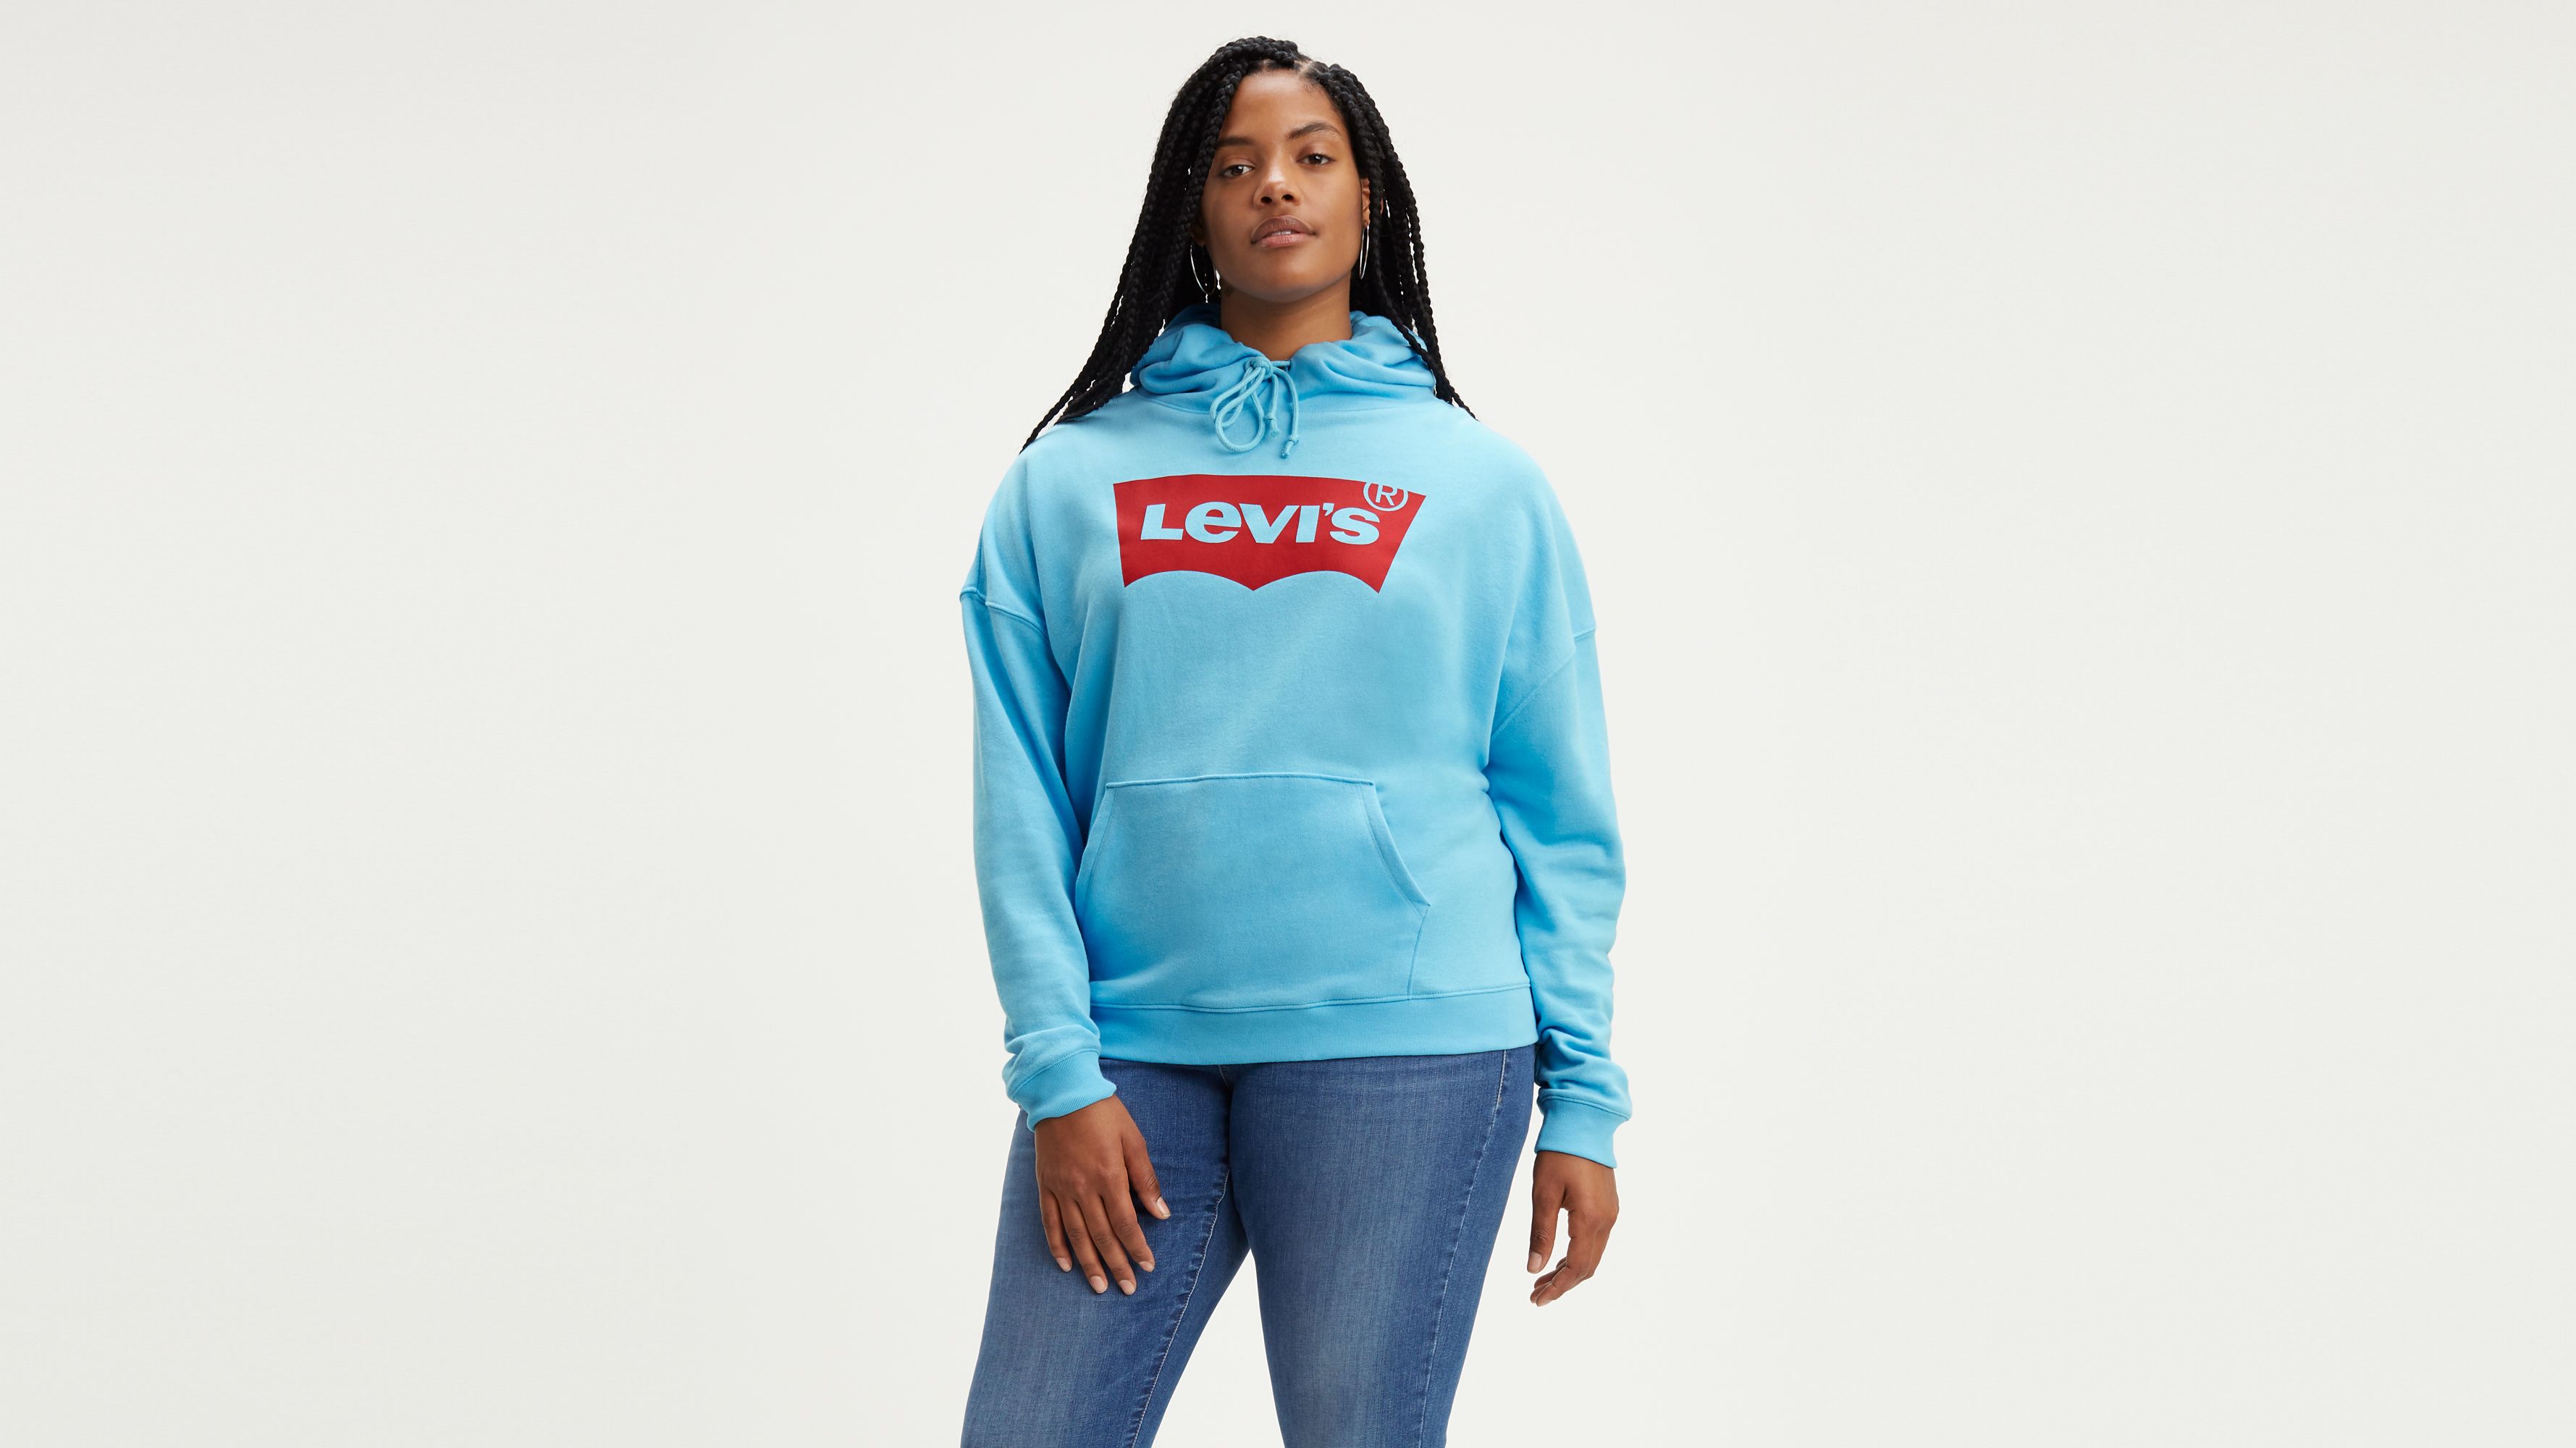 levis sweater womens